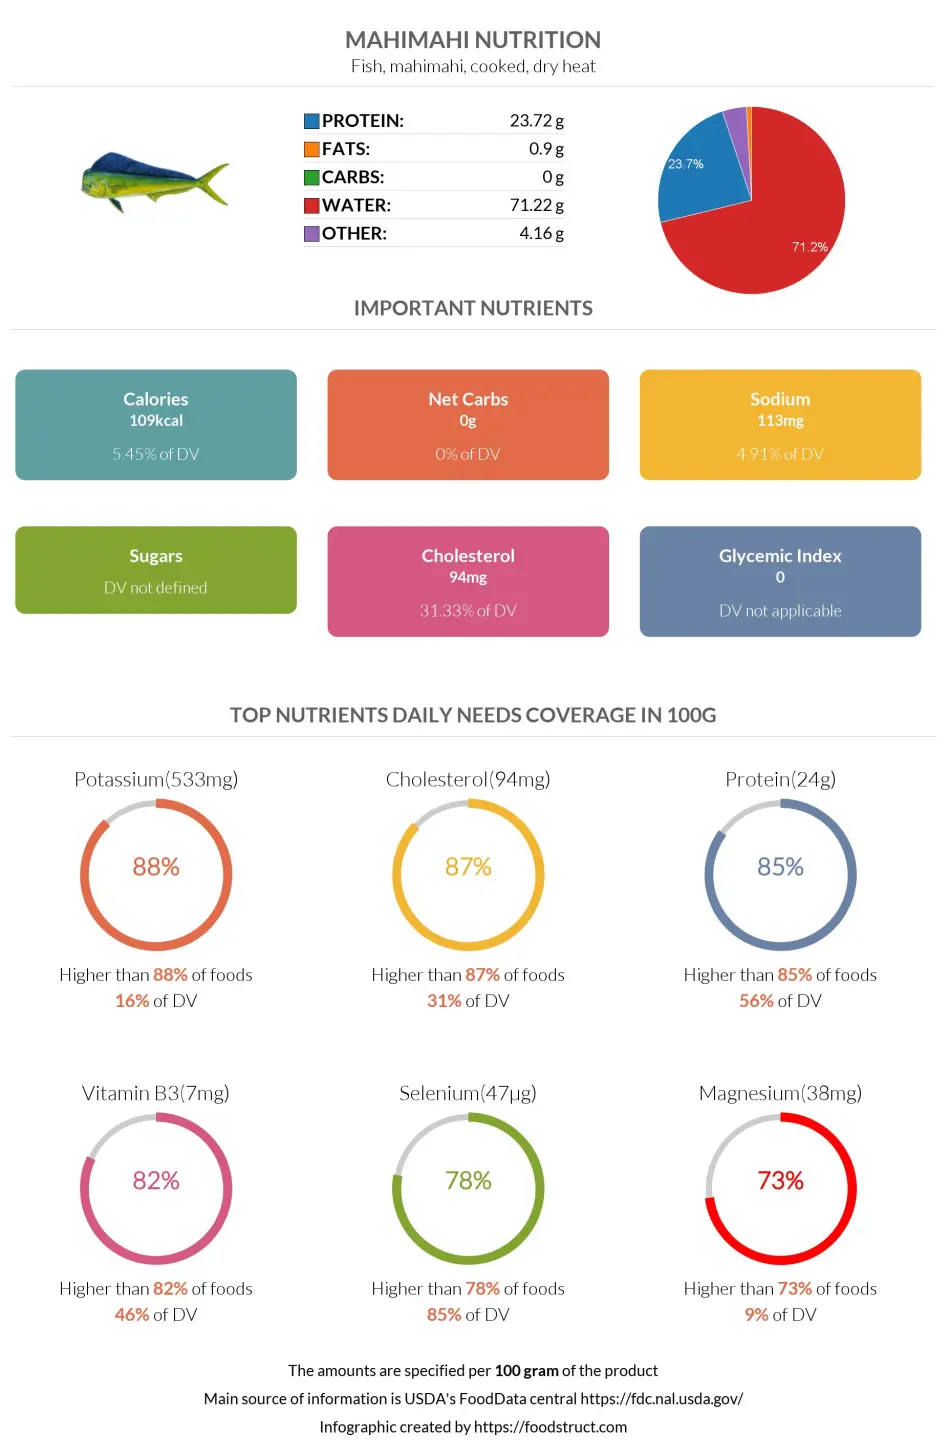 Mahimahi nutrition infographic